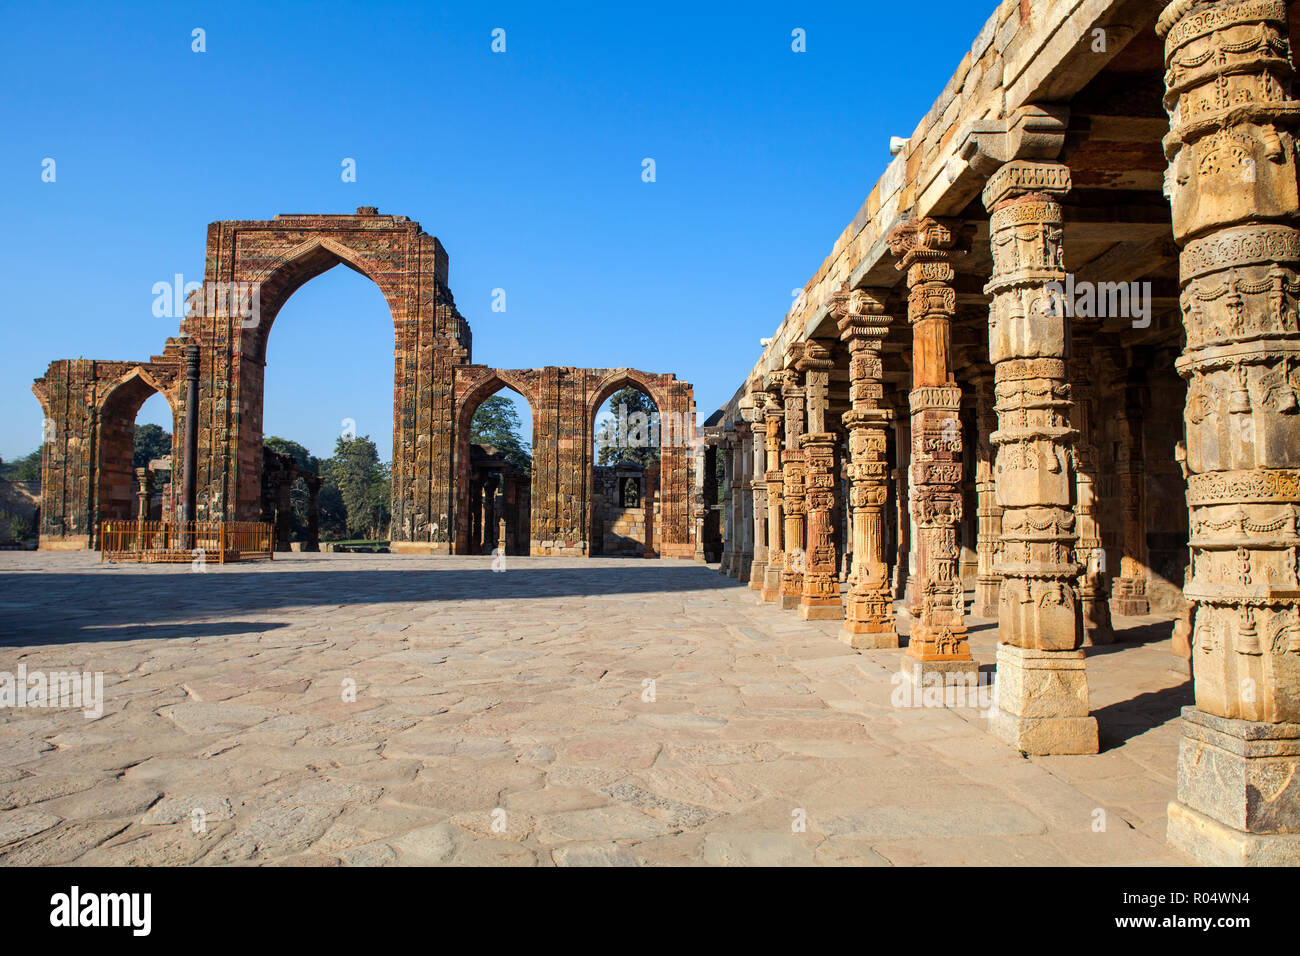 Pillared cloisters, Quqqat-UL-islam Mosque, Qutub Minar, UNESCO World Heritage Site, Delhi, India, Asia Stock Photo